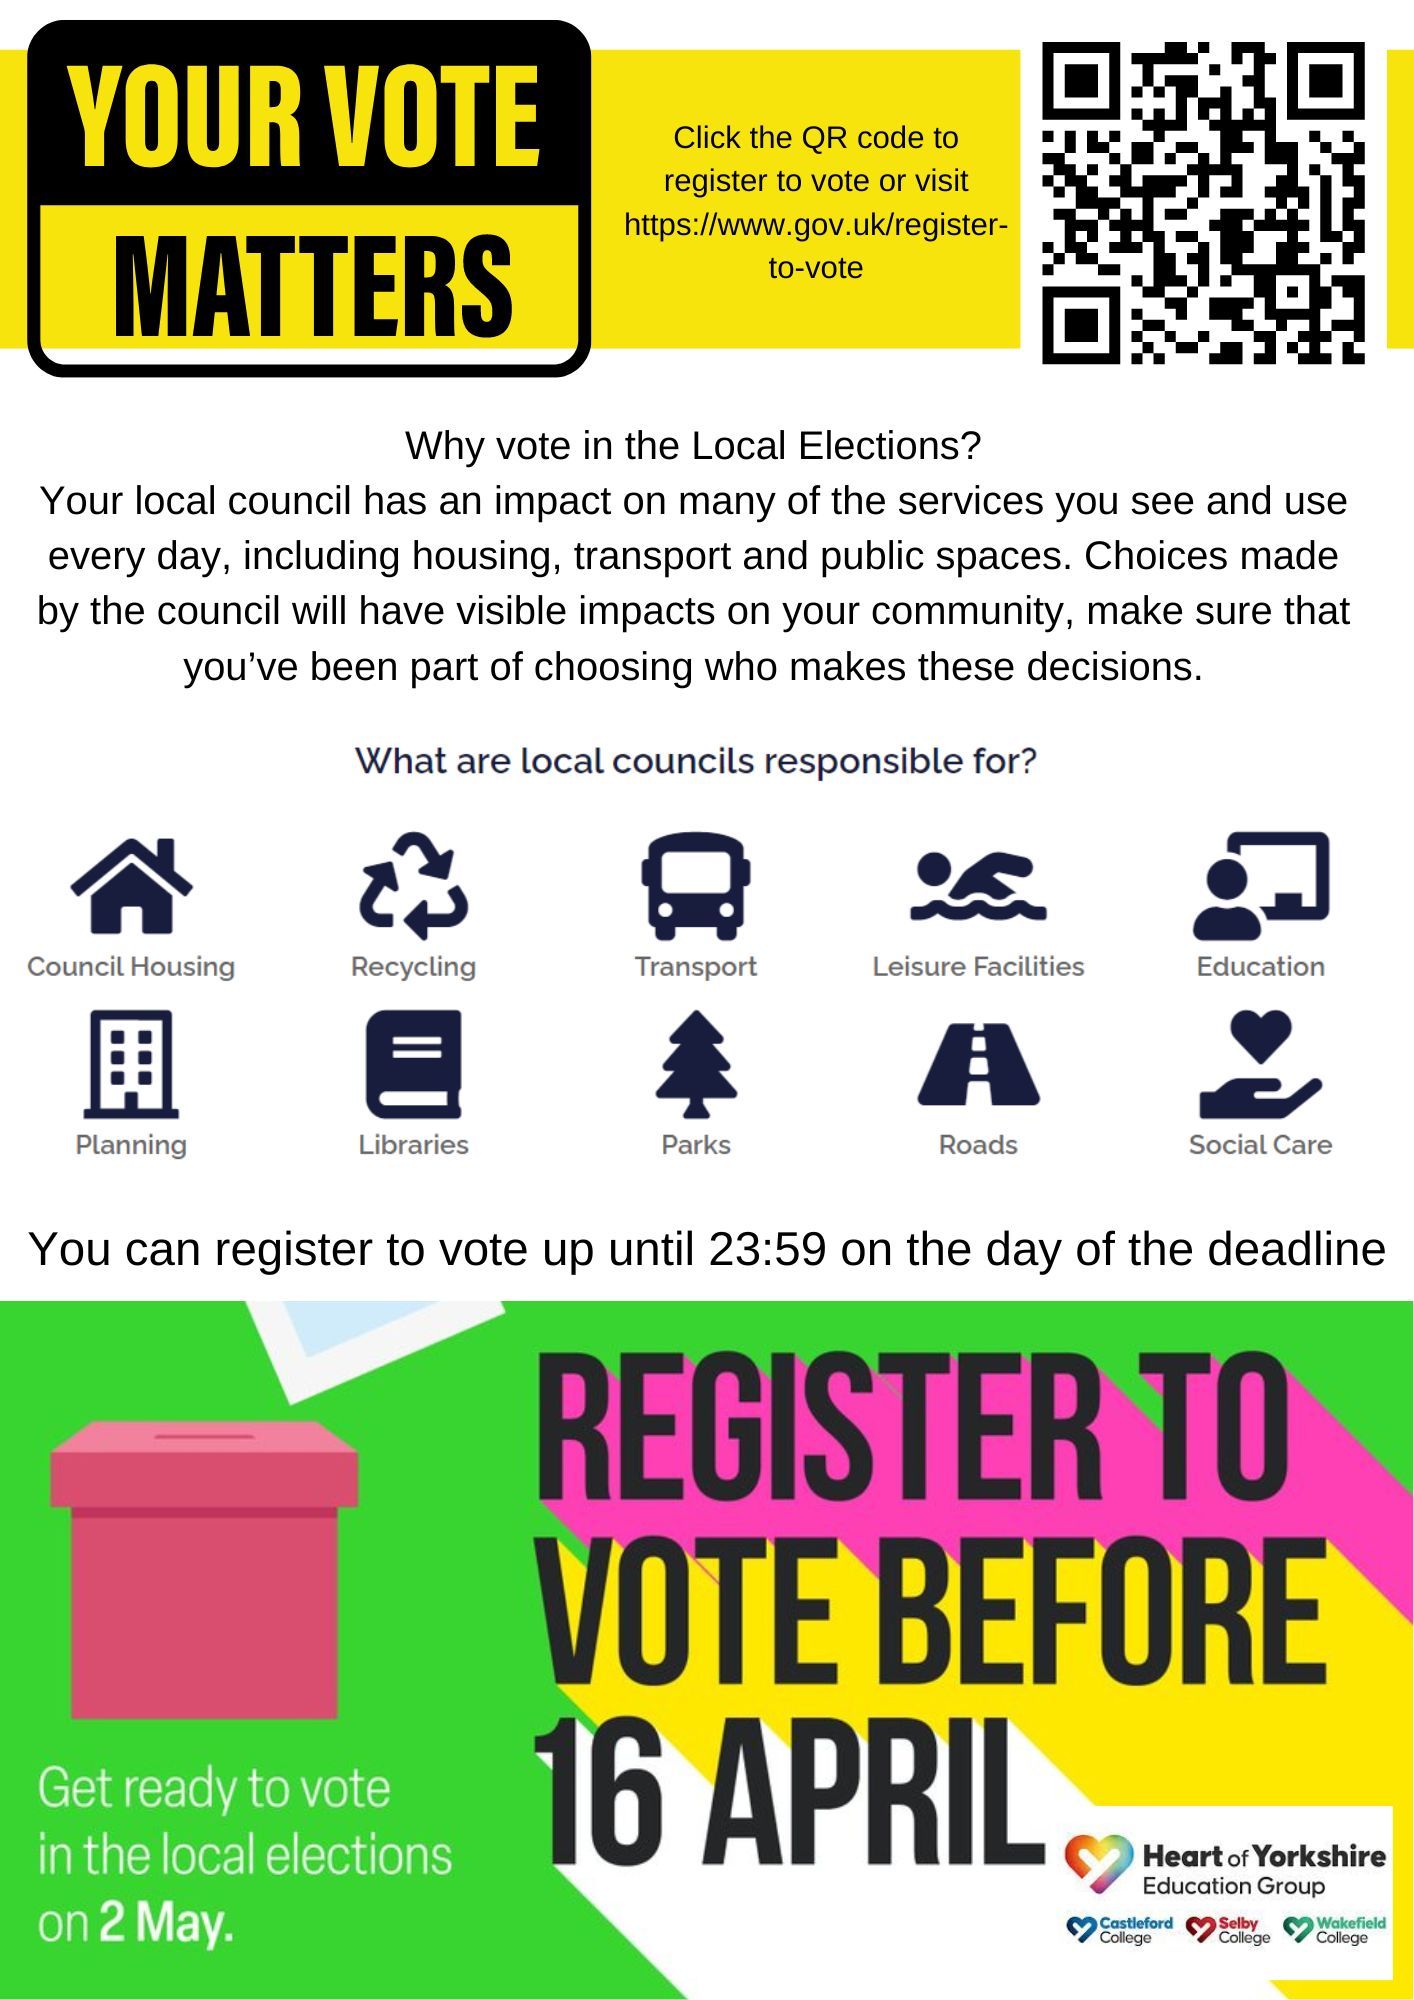 Attachment Register to Vote poster.jpg